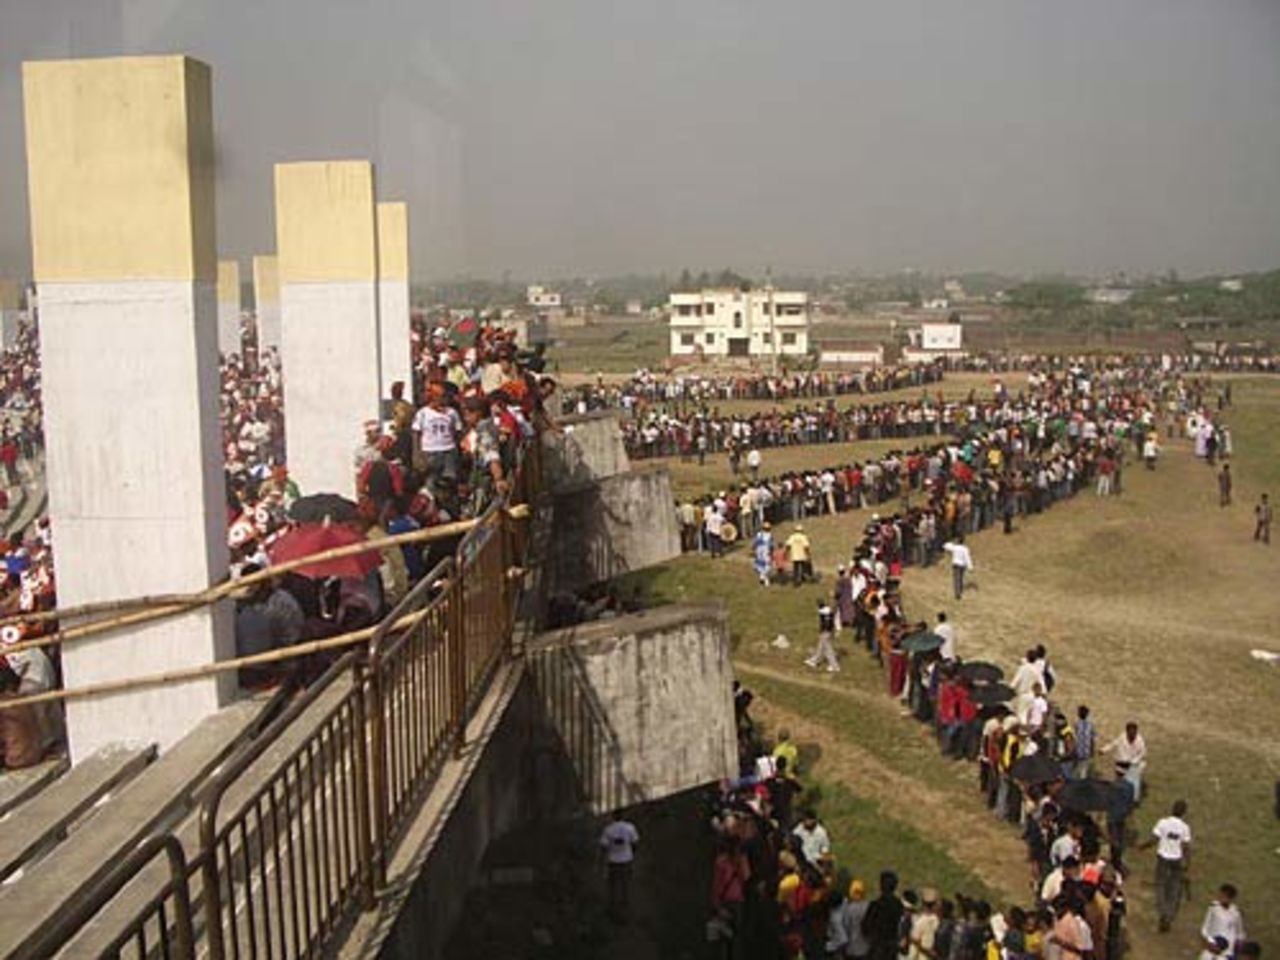 Crowds form long queues to get into the Fatullah Stadium, Bangladesh v Kenya, 3rd ODI, Fatullah, March 23, 2006